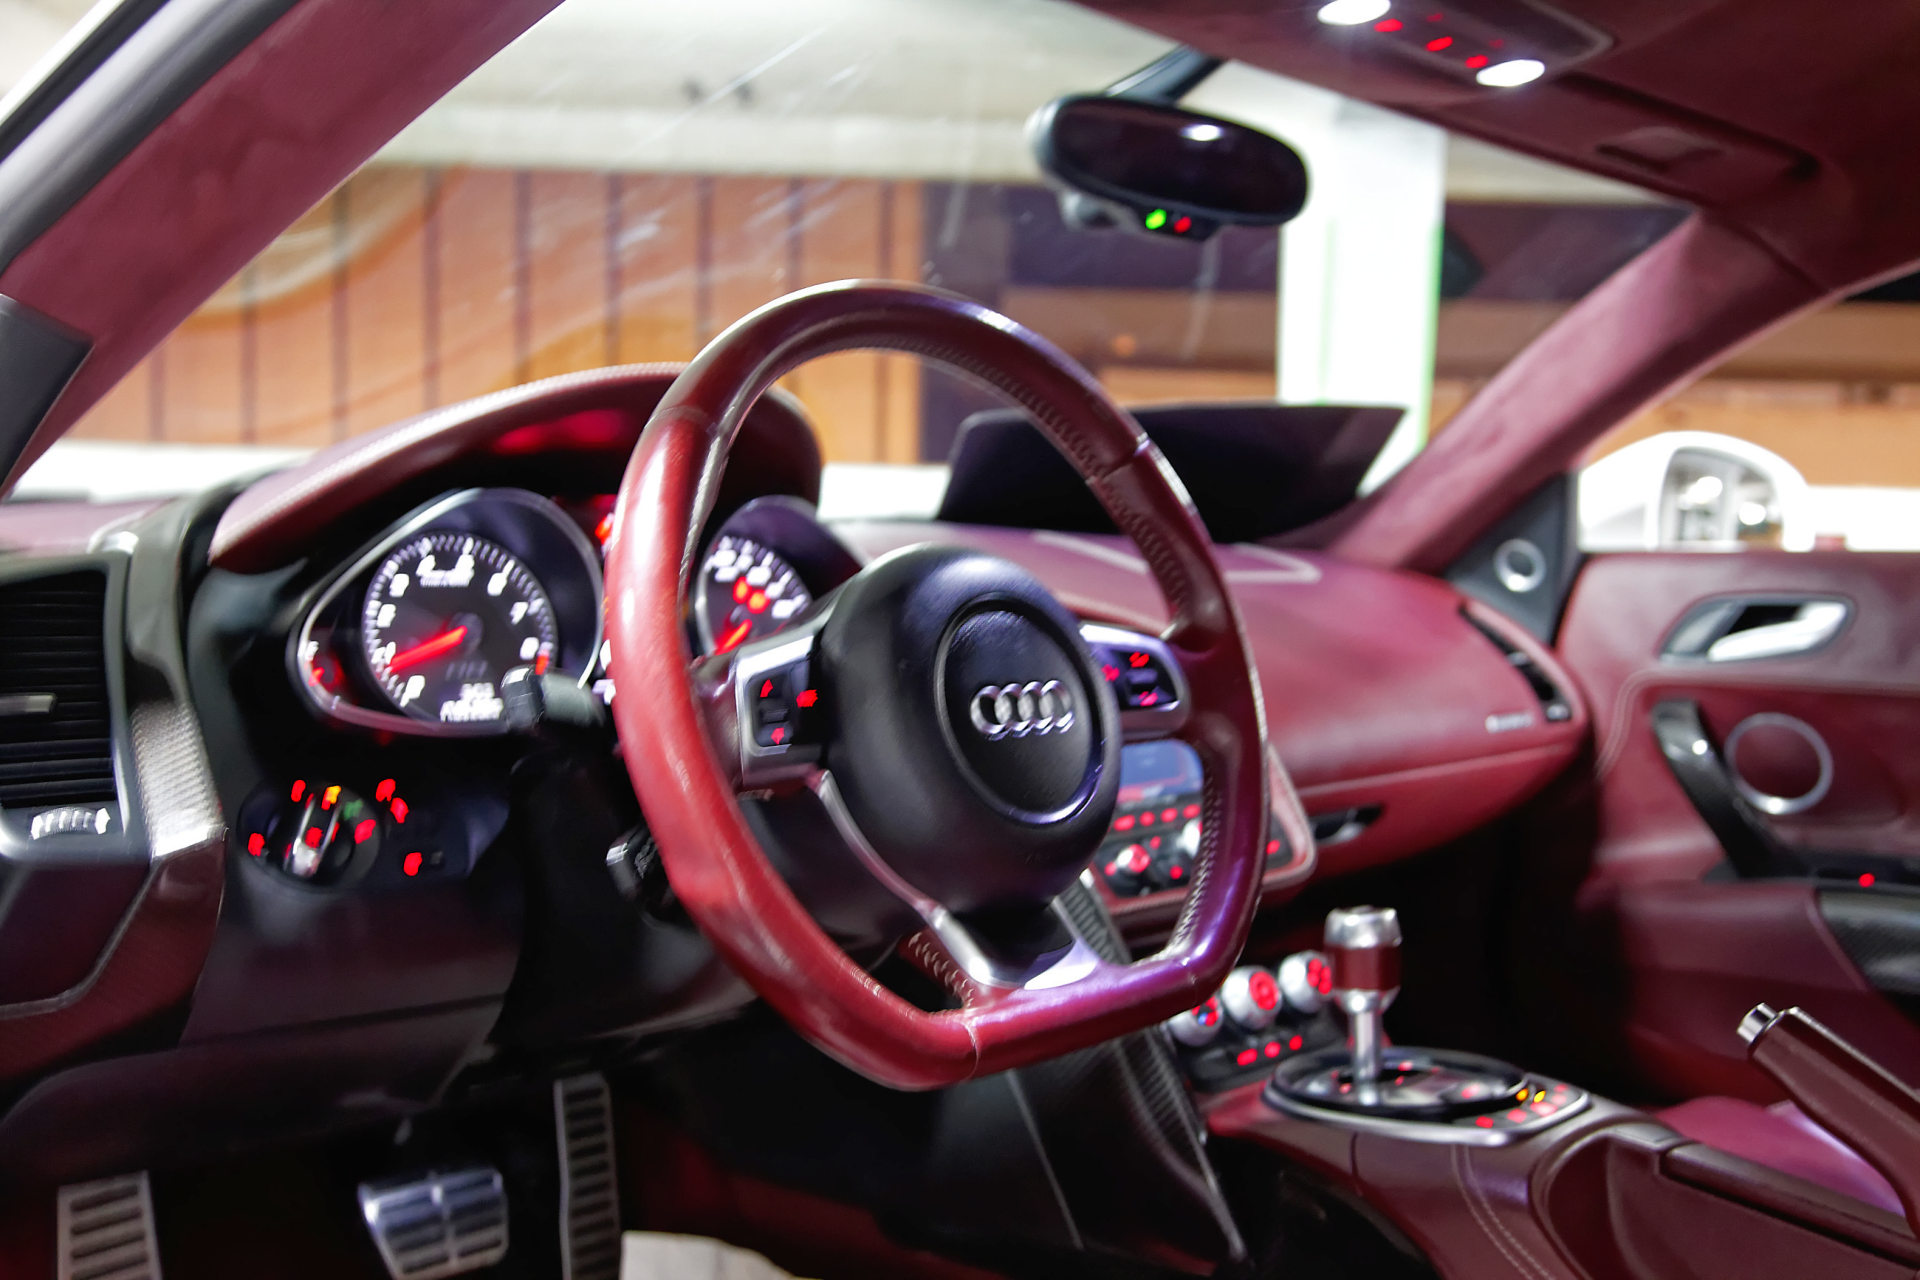 Audi R8 Import audi r8 lhd angleterre audi R8 V8 TFSI AUDI uk importation audi LHD volant a gauche13 DxO - AUDI R8 ANGLETERRE IMPORTATION AUDI R8 UK IMPORT SUPERCAR FELICITATION A CHARLES POUR CET IMPORT